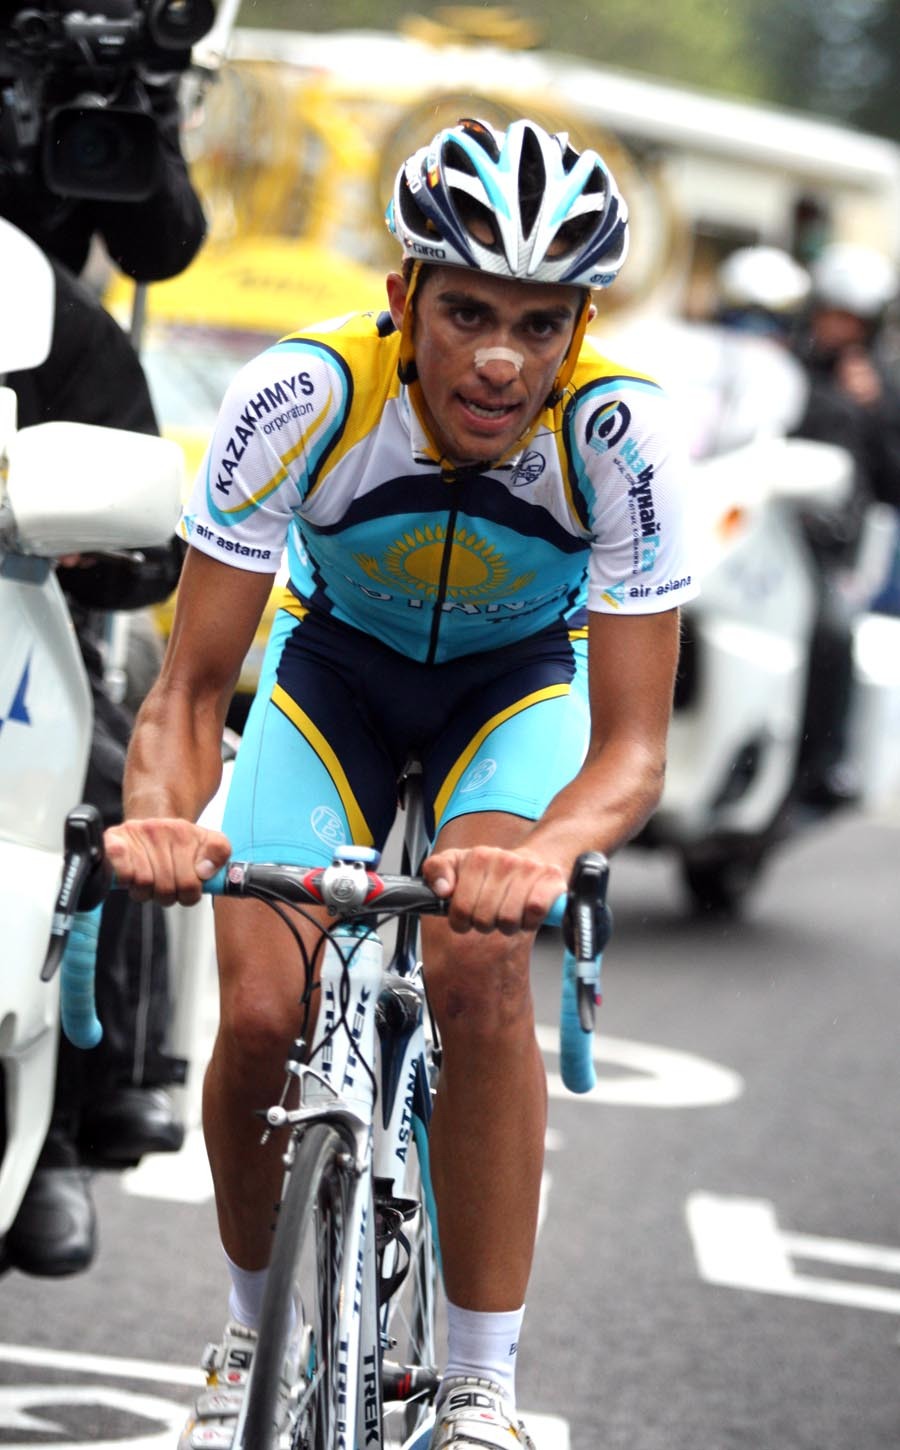 Alberto Contador wygrał Vuelta a Espana 2012